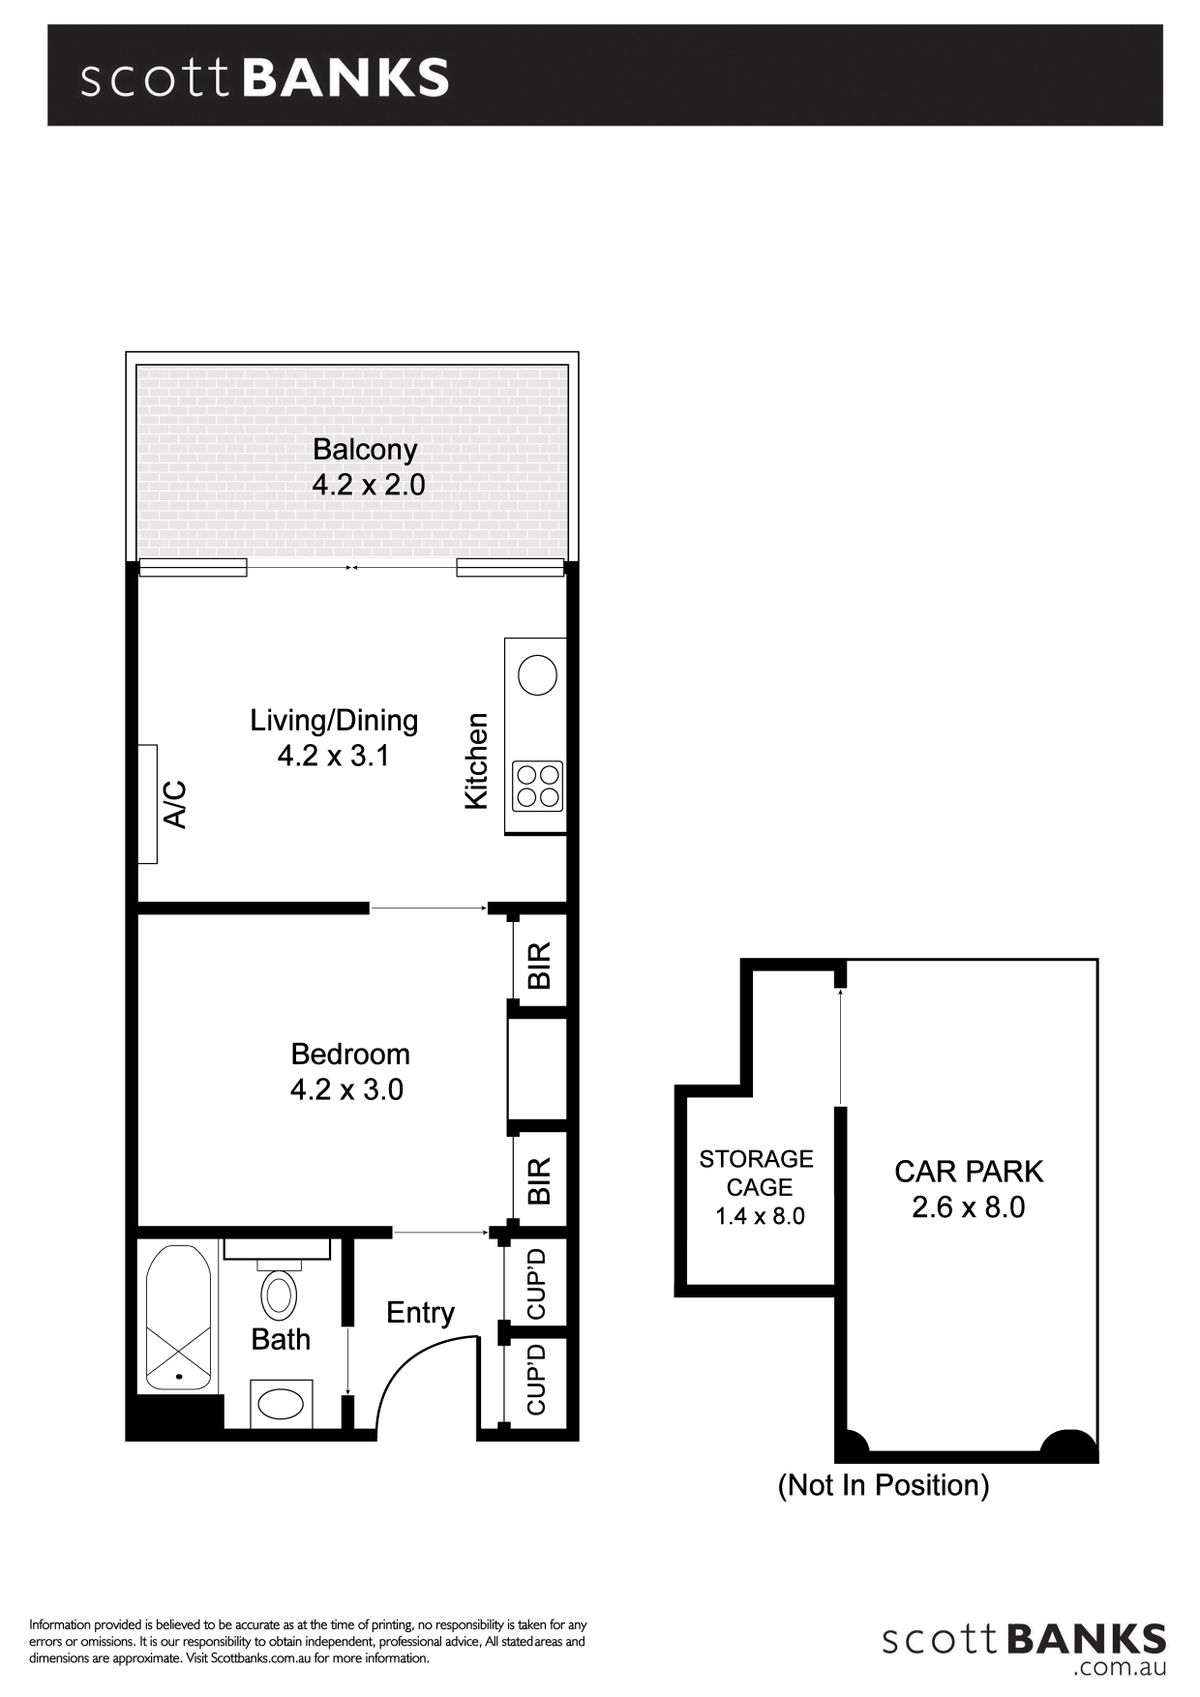 Floor plan for 106 77 river street south yarra 3141  v2 (1)